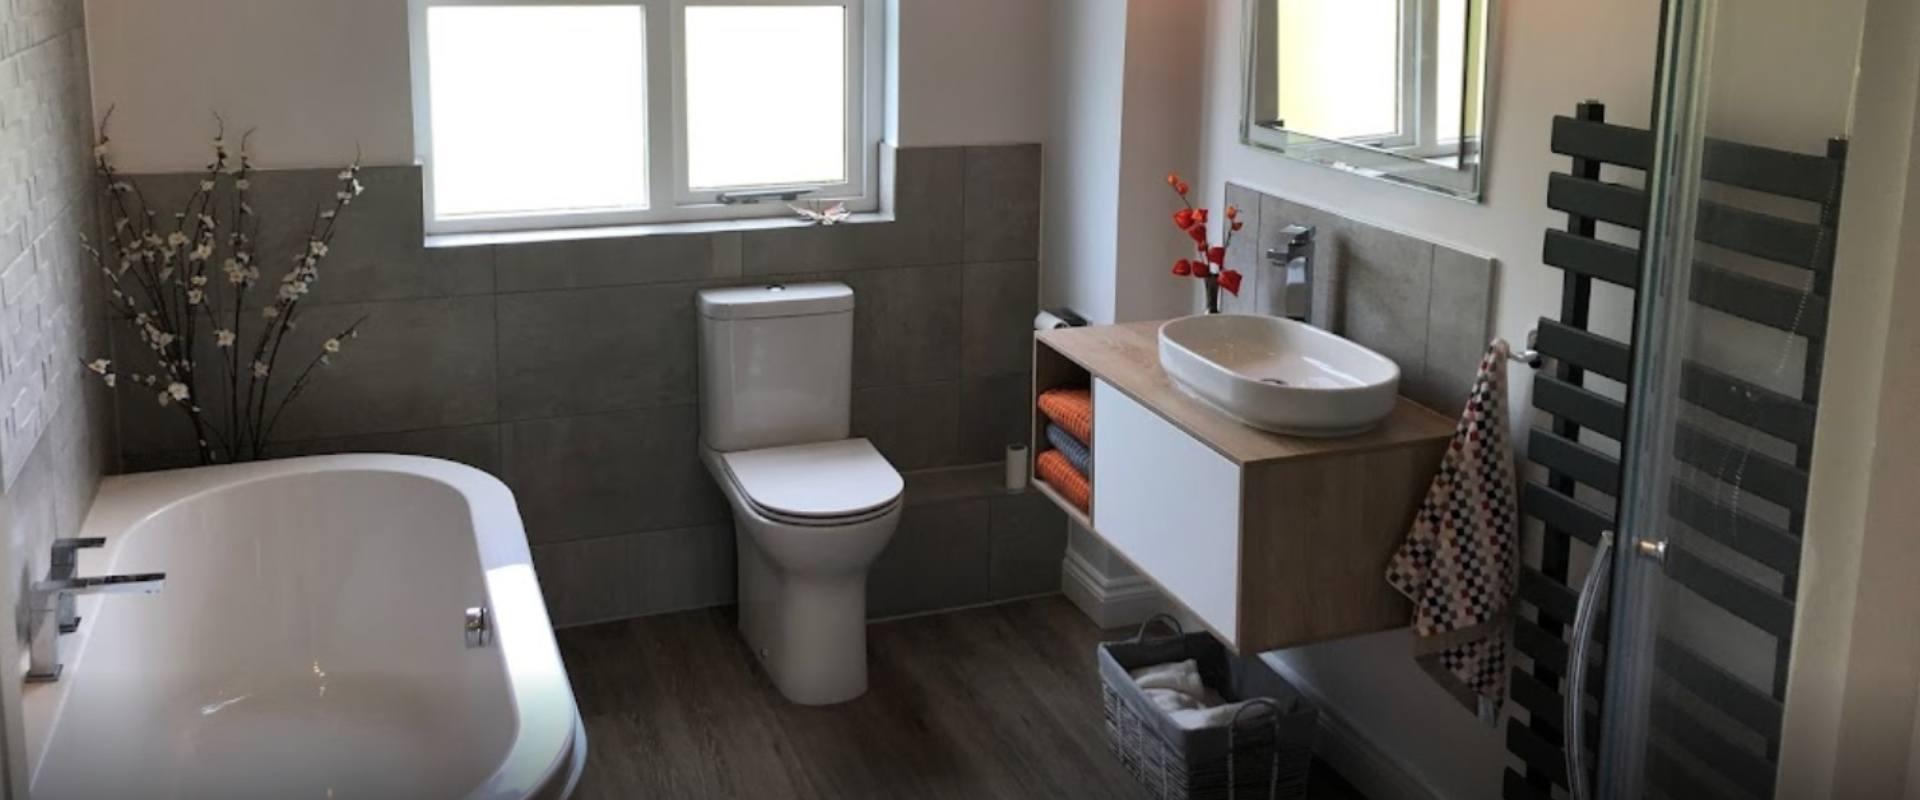 Boilers, Bathrooms &amp; Plumbing Malvern Plumbing Services